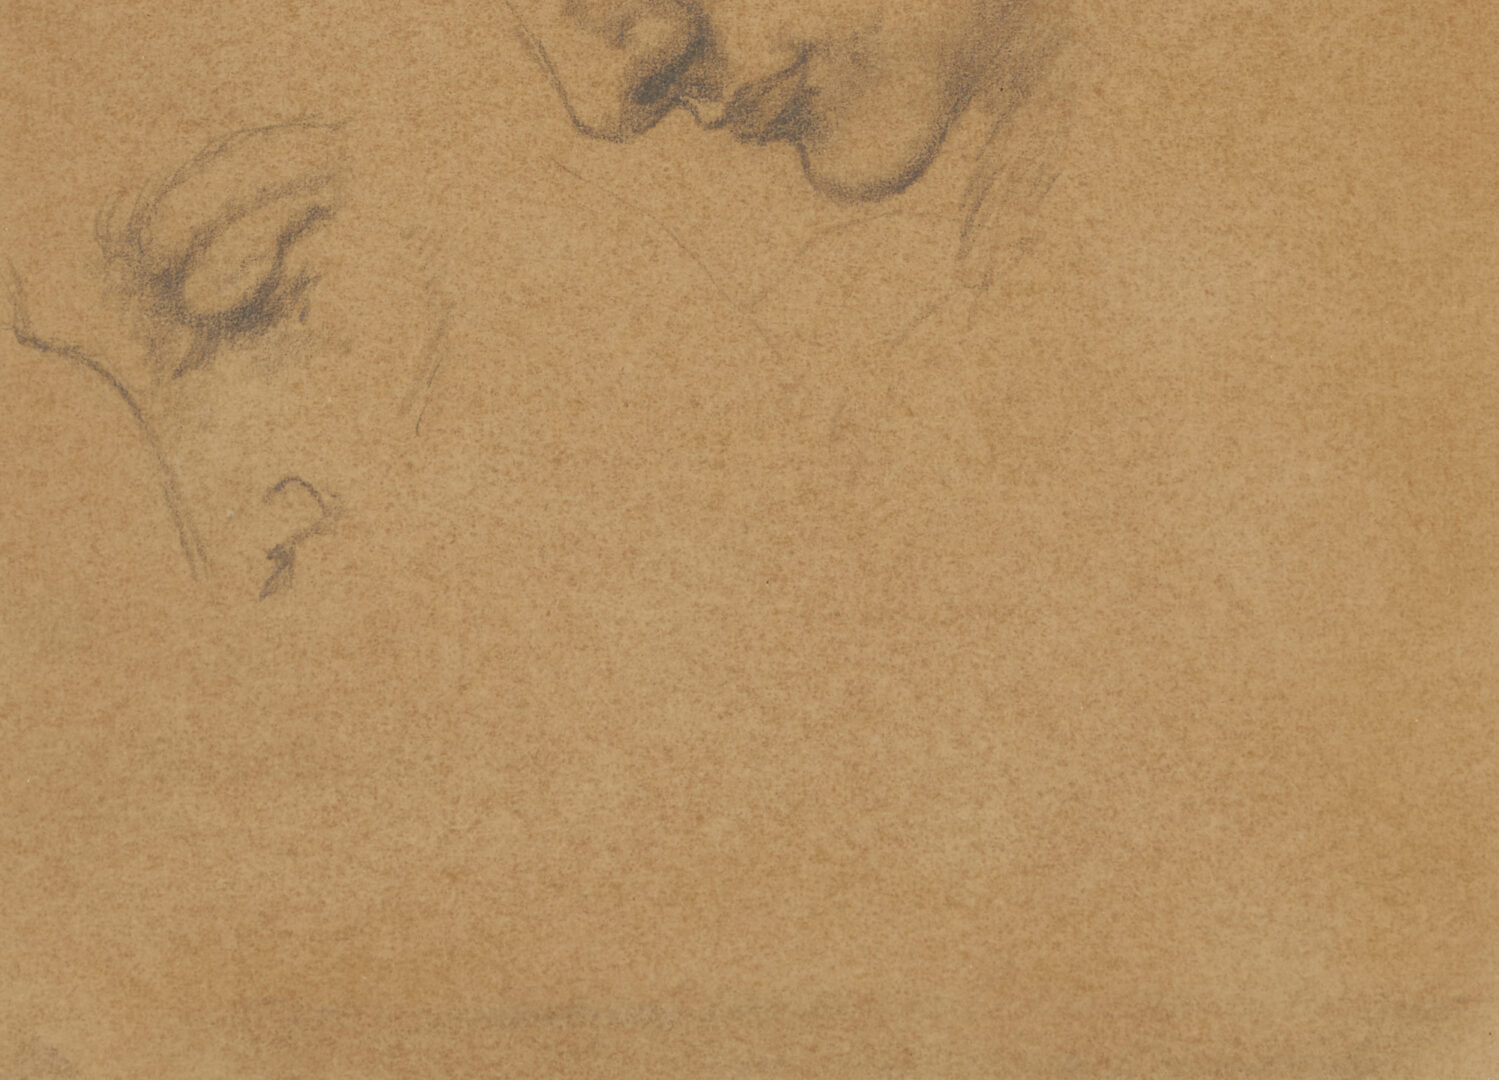 Lot 664: 3 Works on Paper Incl. Weisbuch, Puvis de Chavanne, & After Michelangelo